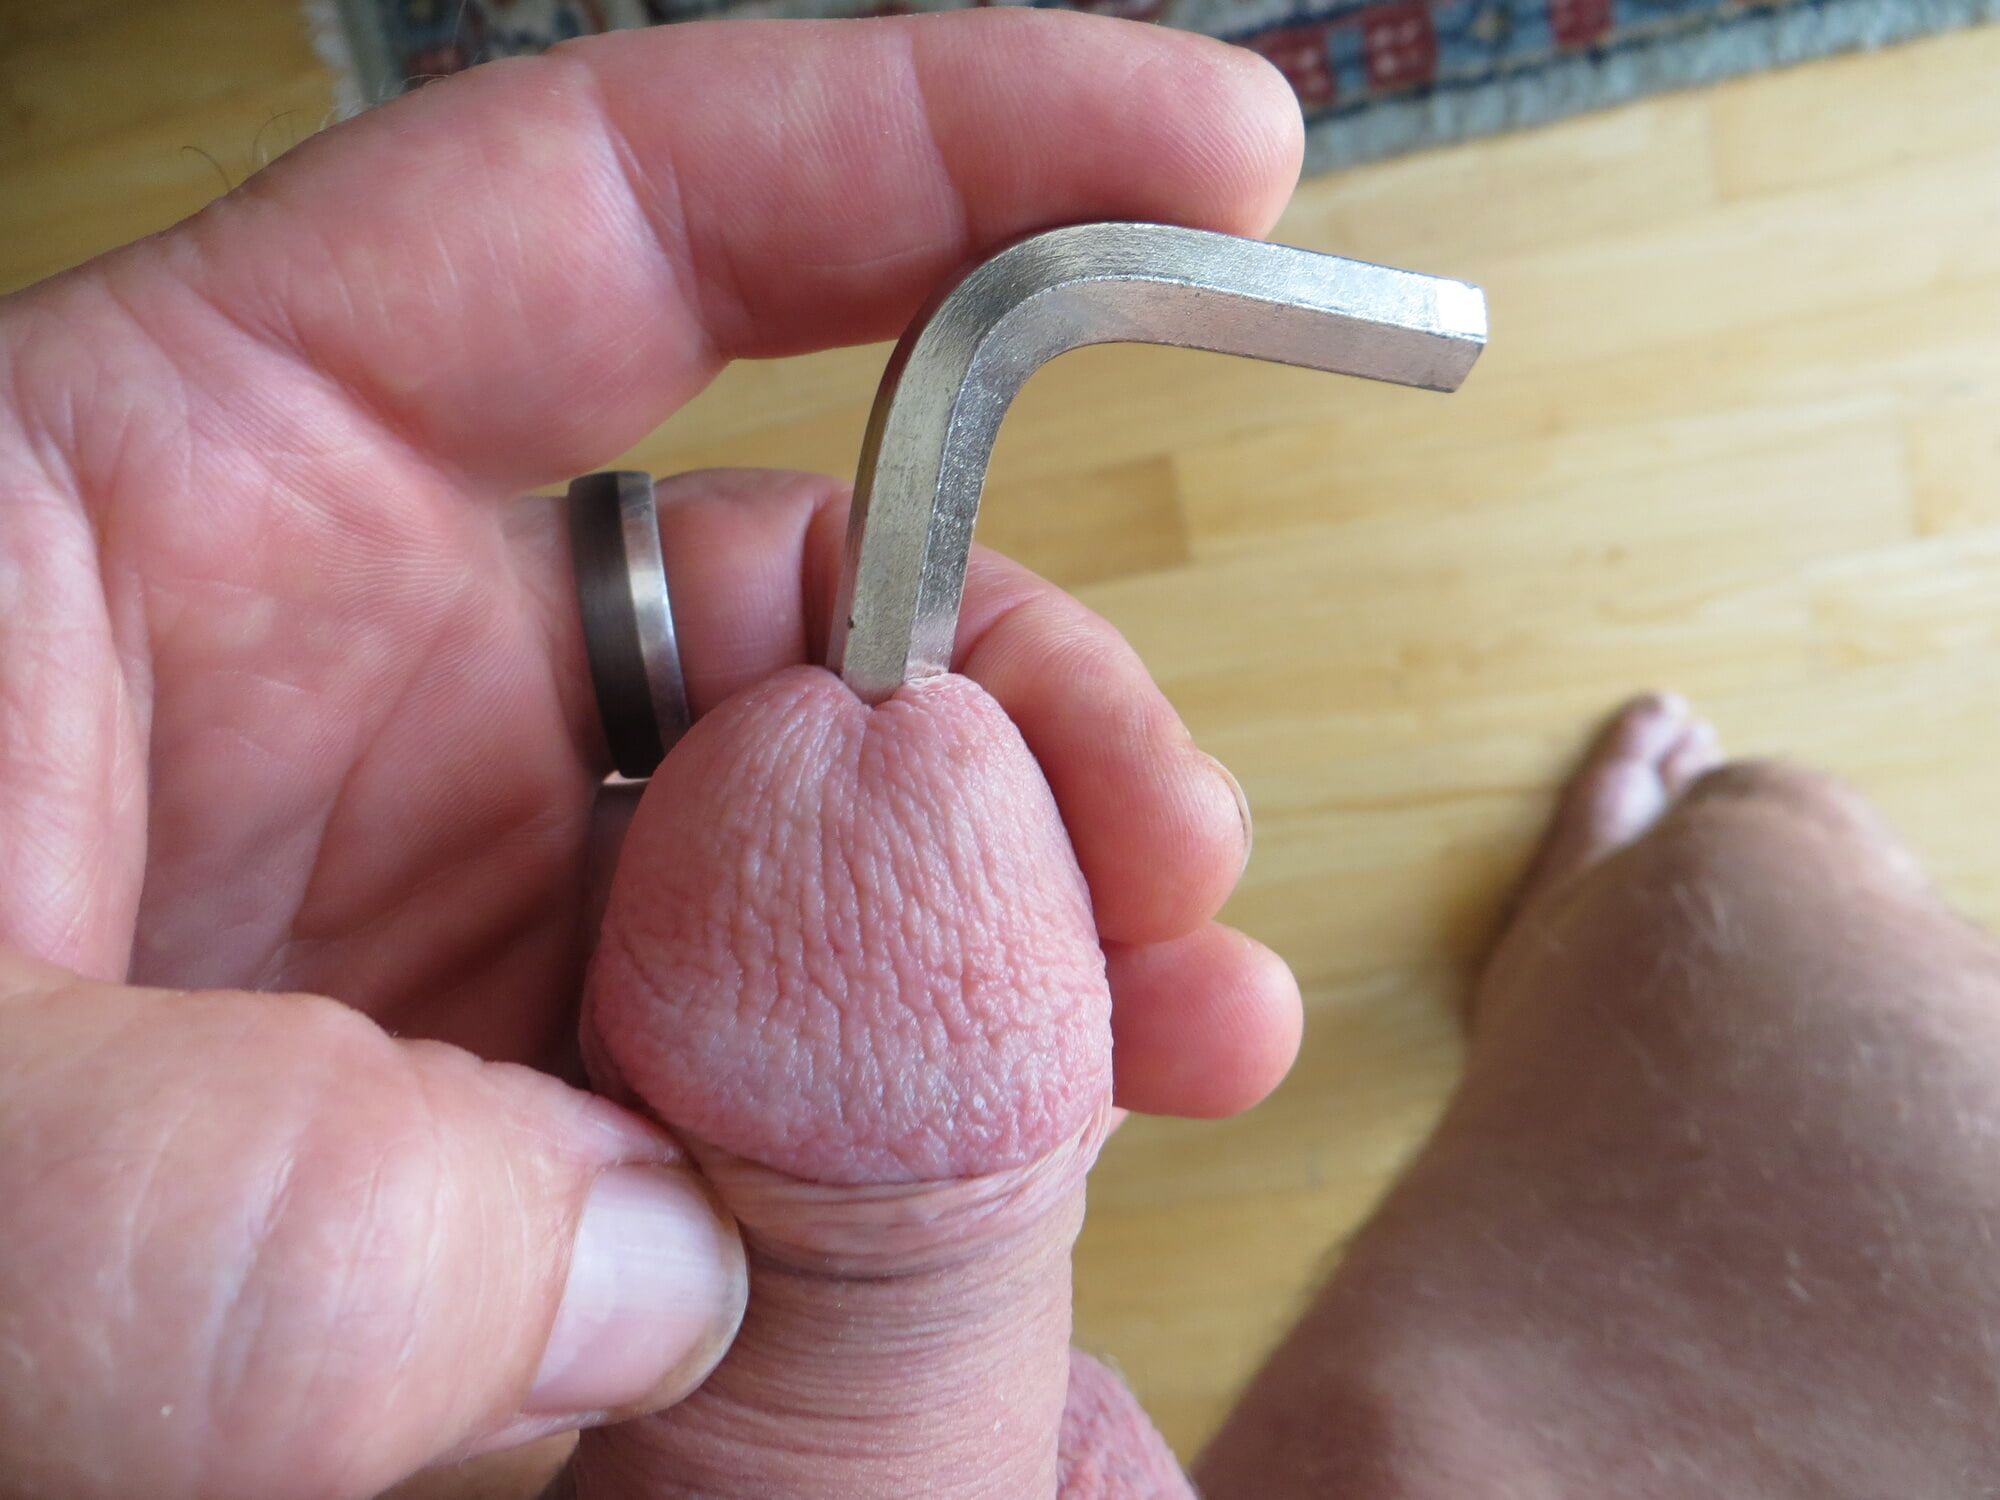 10mm Allen wrench in my dick #9